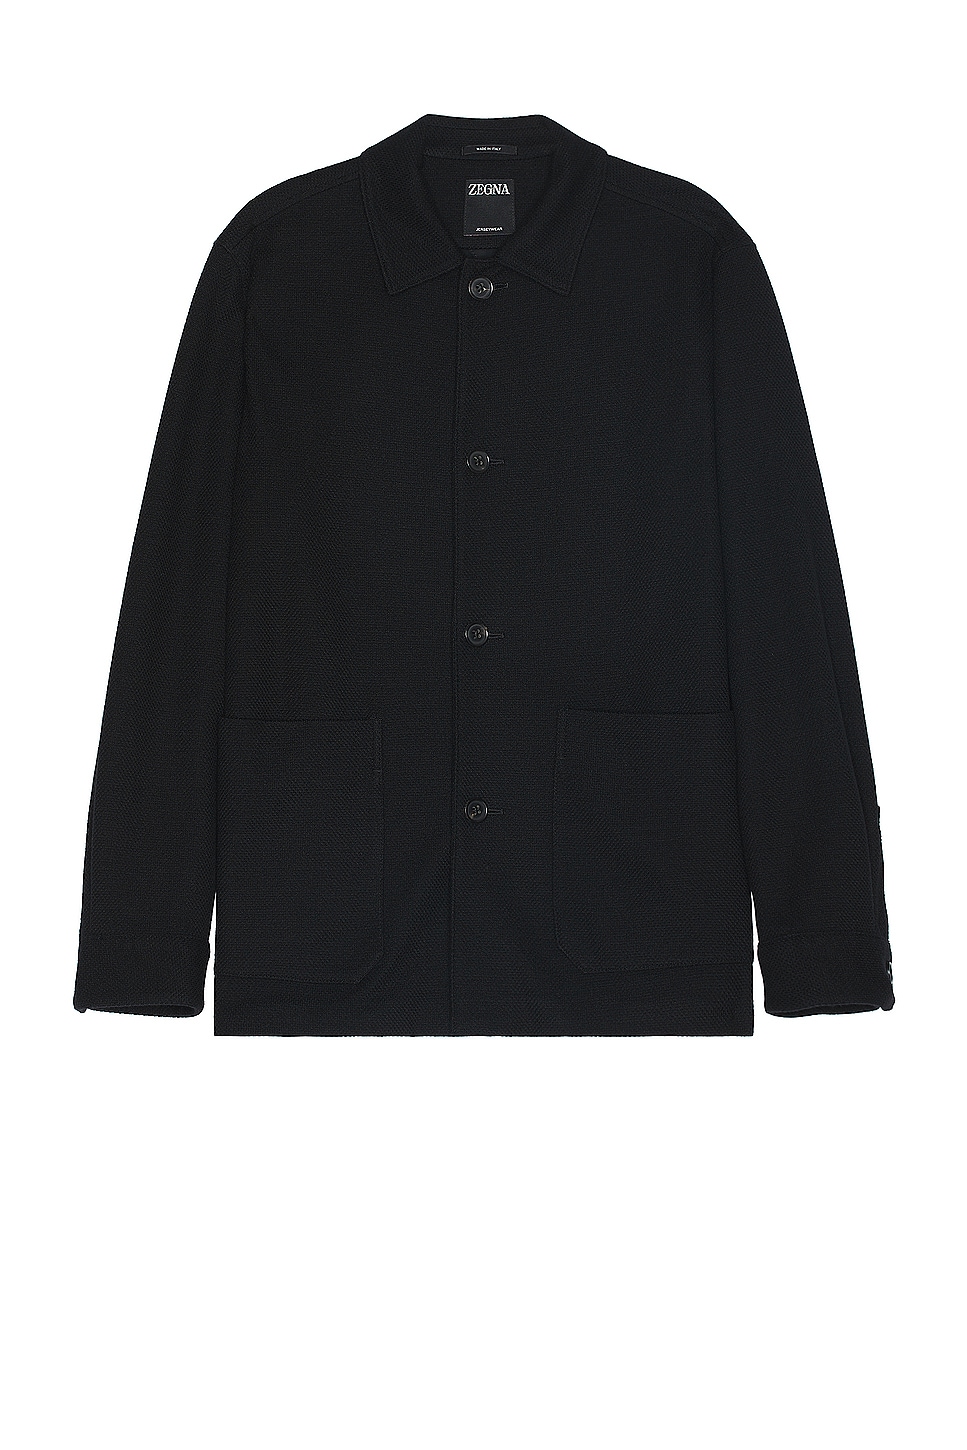 Image 1 of Zegna Cashmere Blend Chore Jacket in Black